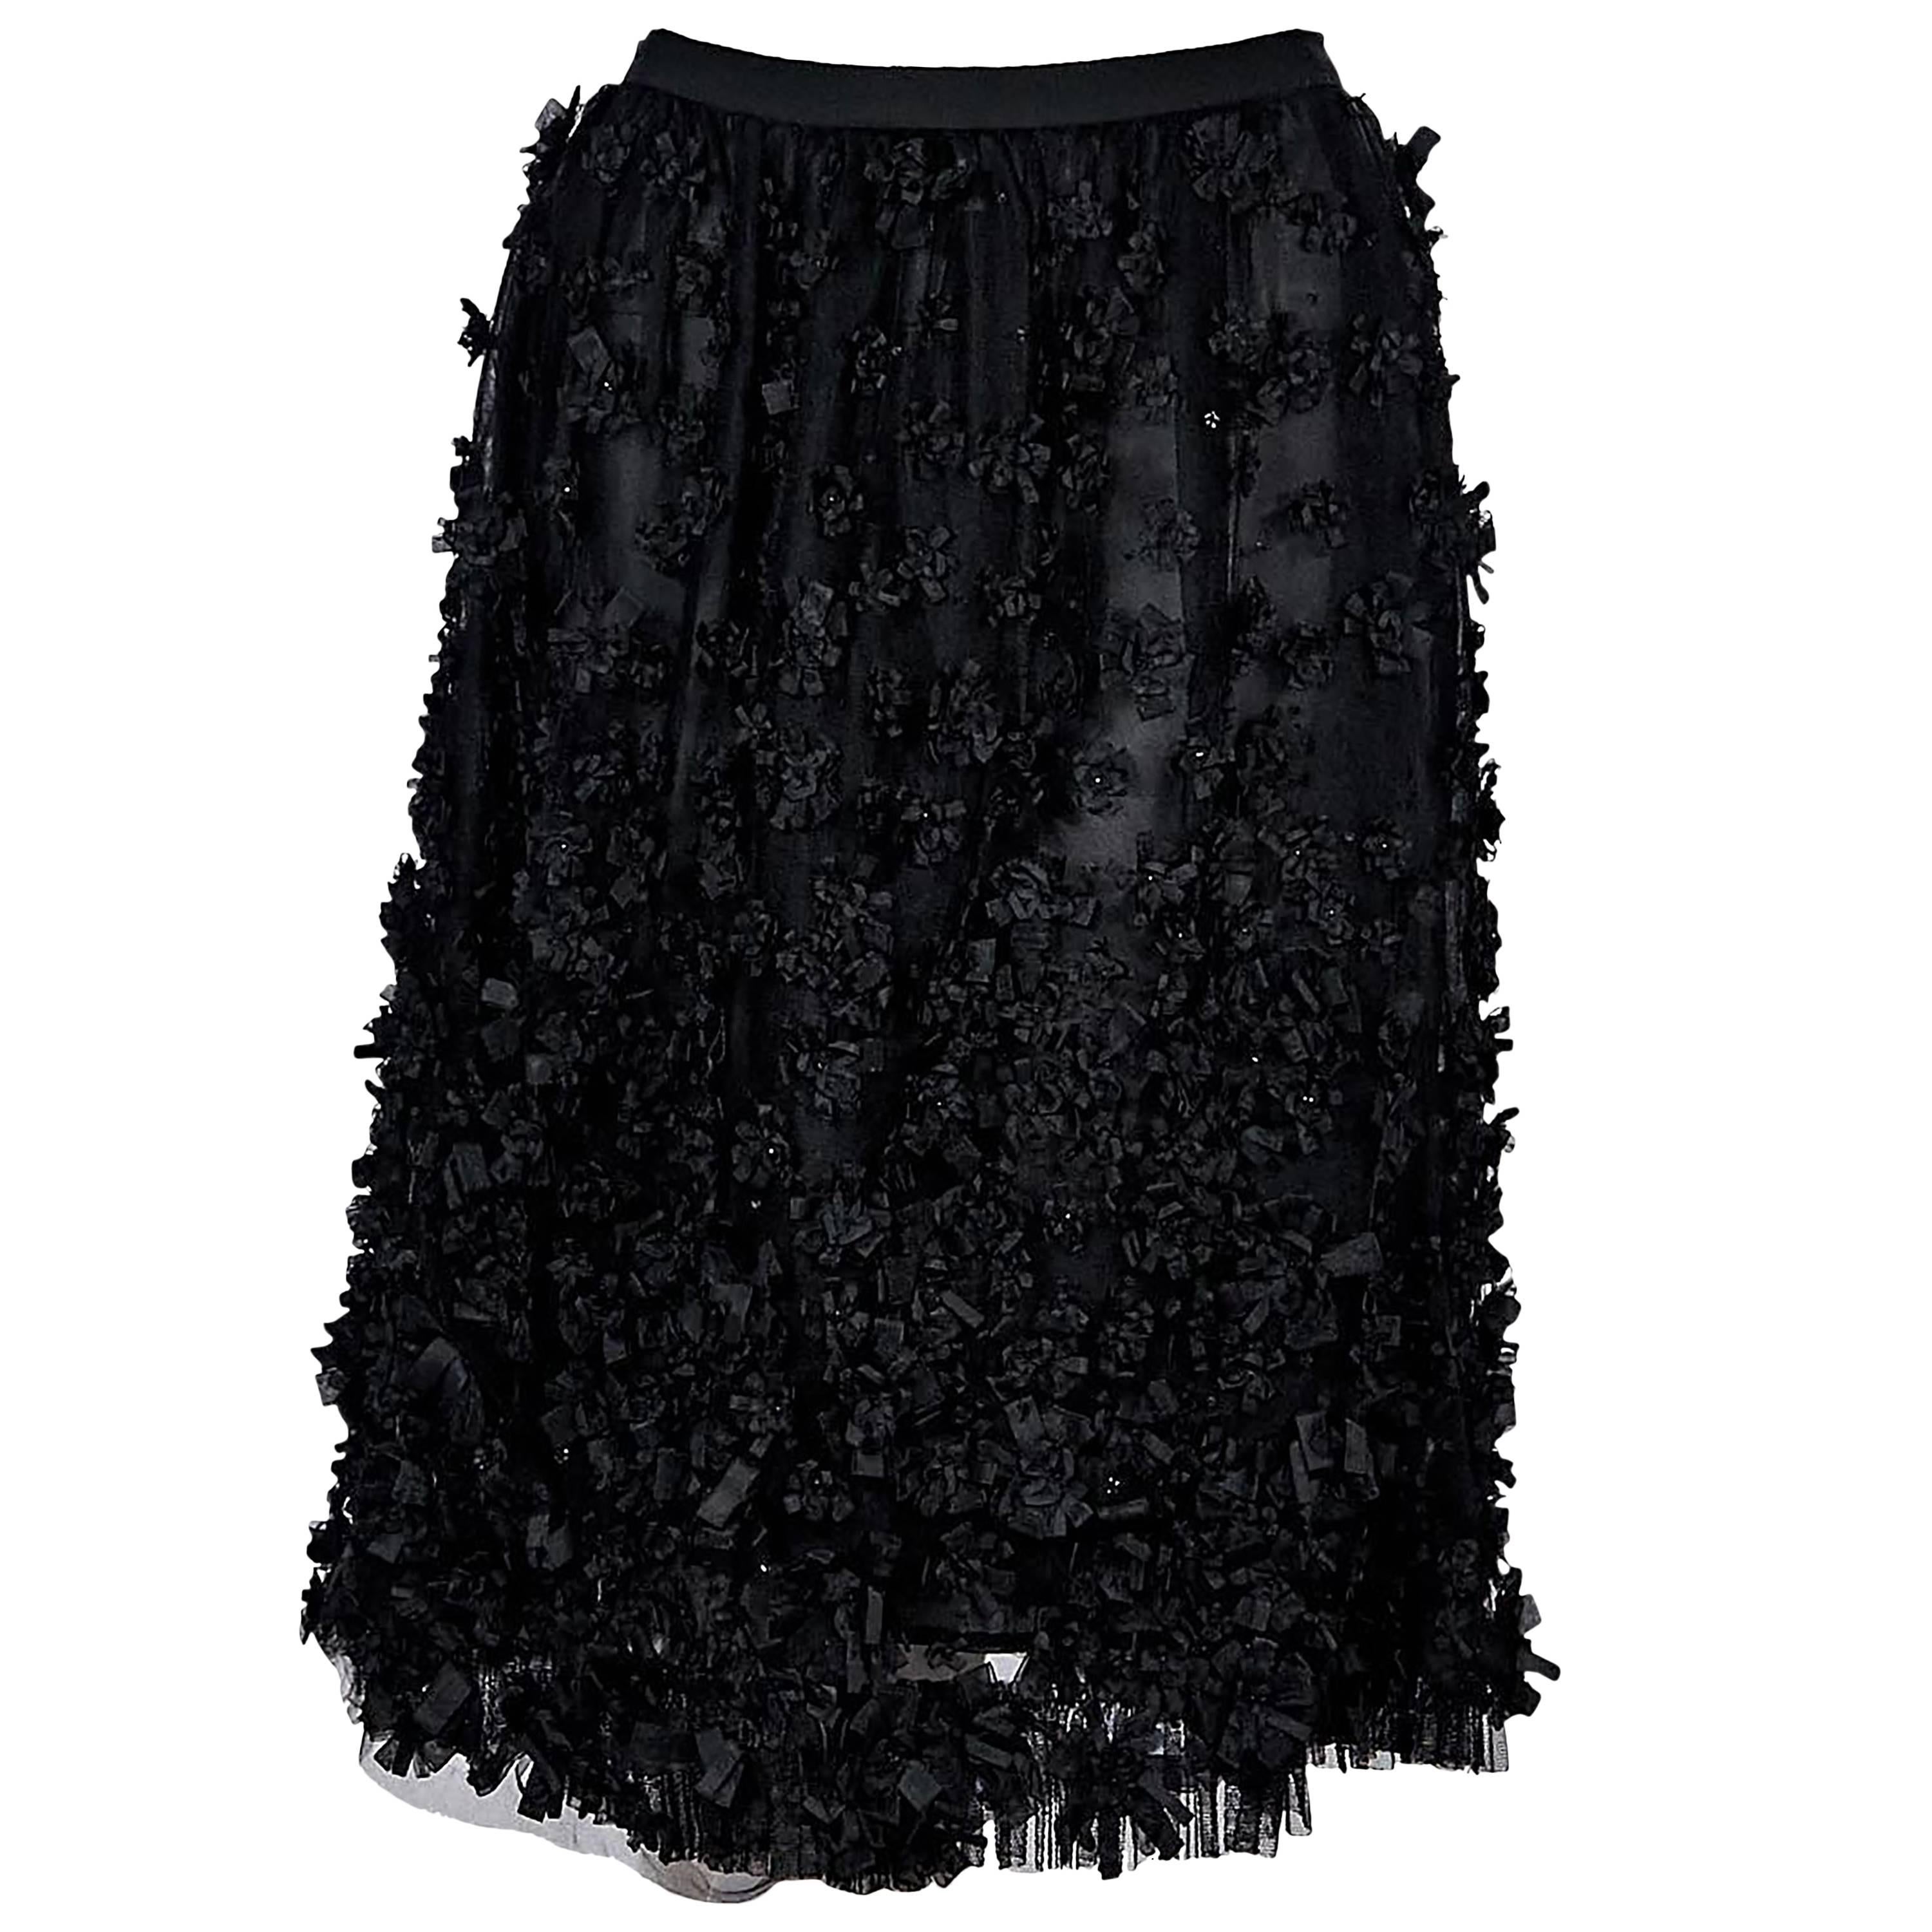 Black Oscar de la Renta Applique Skirt